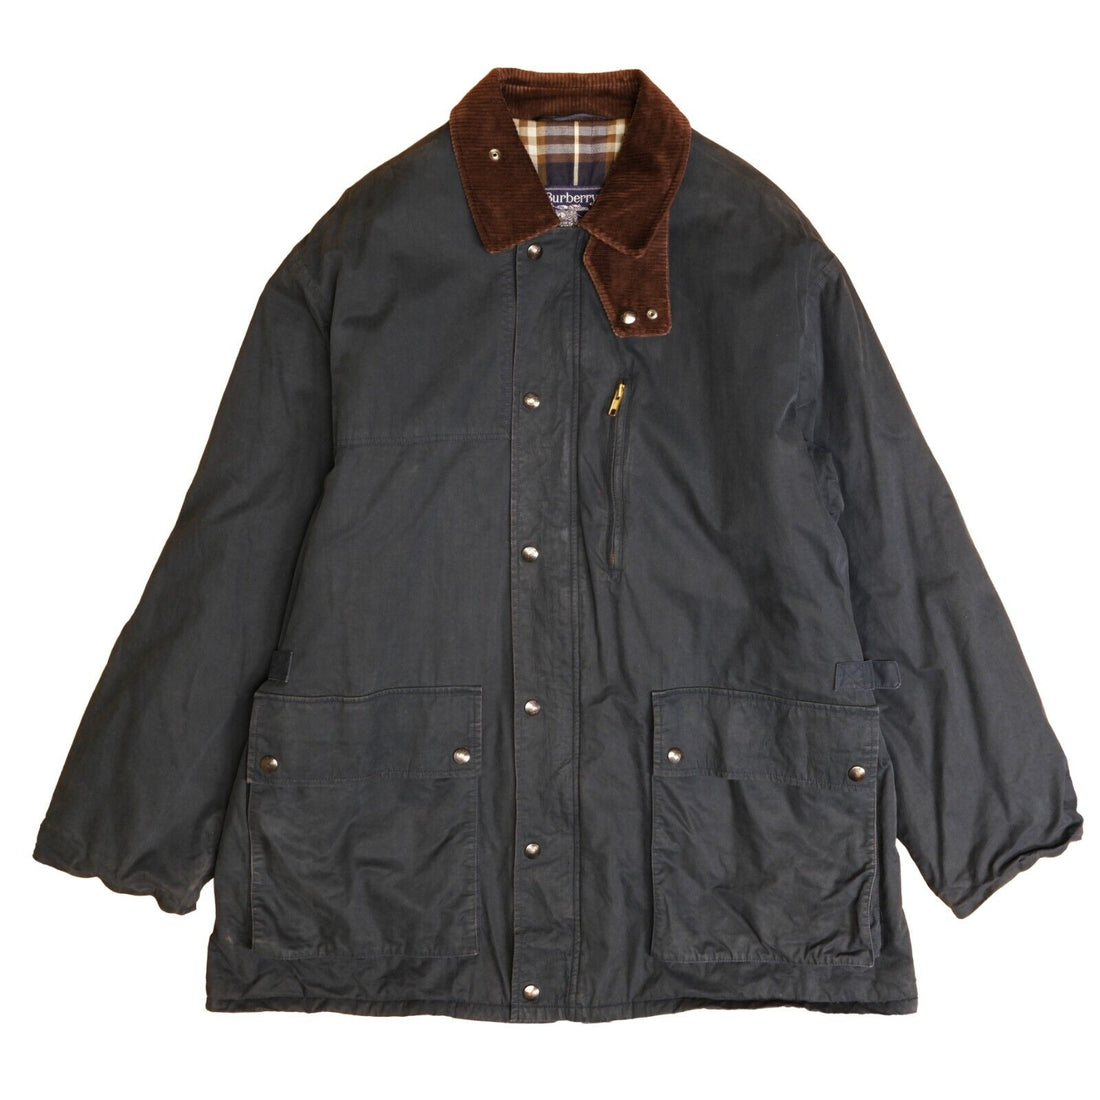 Vintage Burberrys Chore Coat Jacket Size Large Blue Plaid Lined